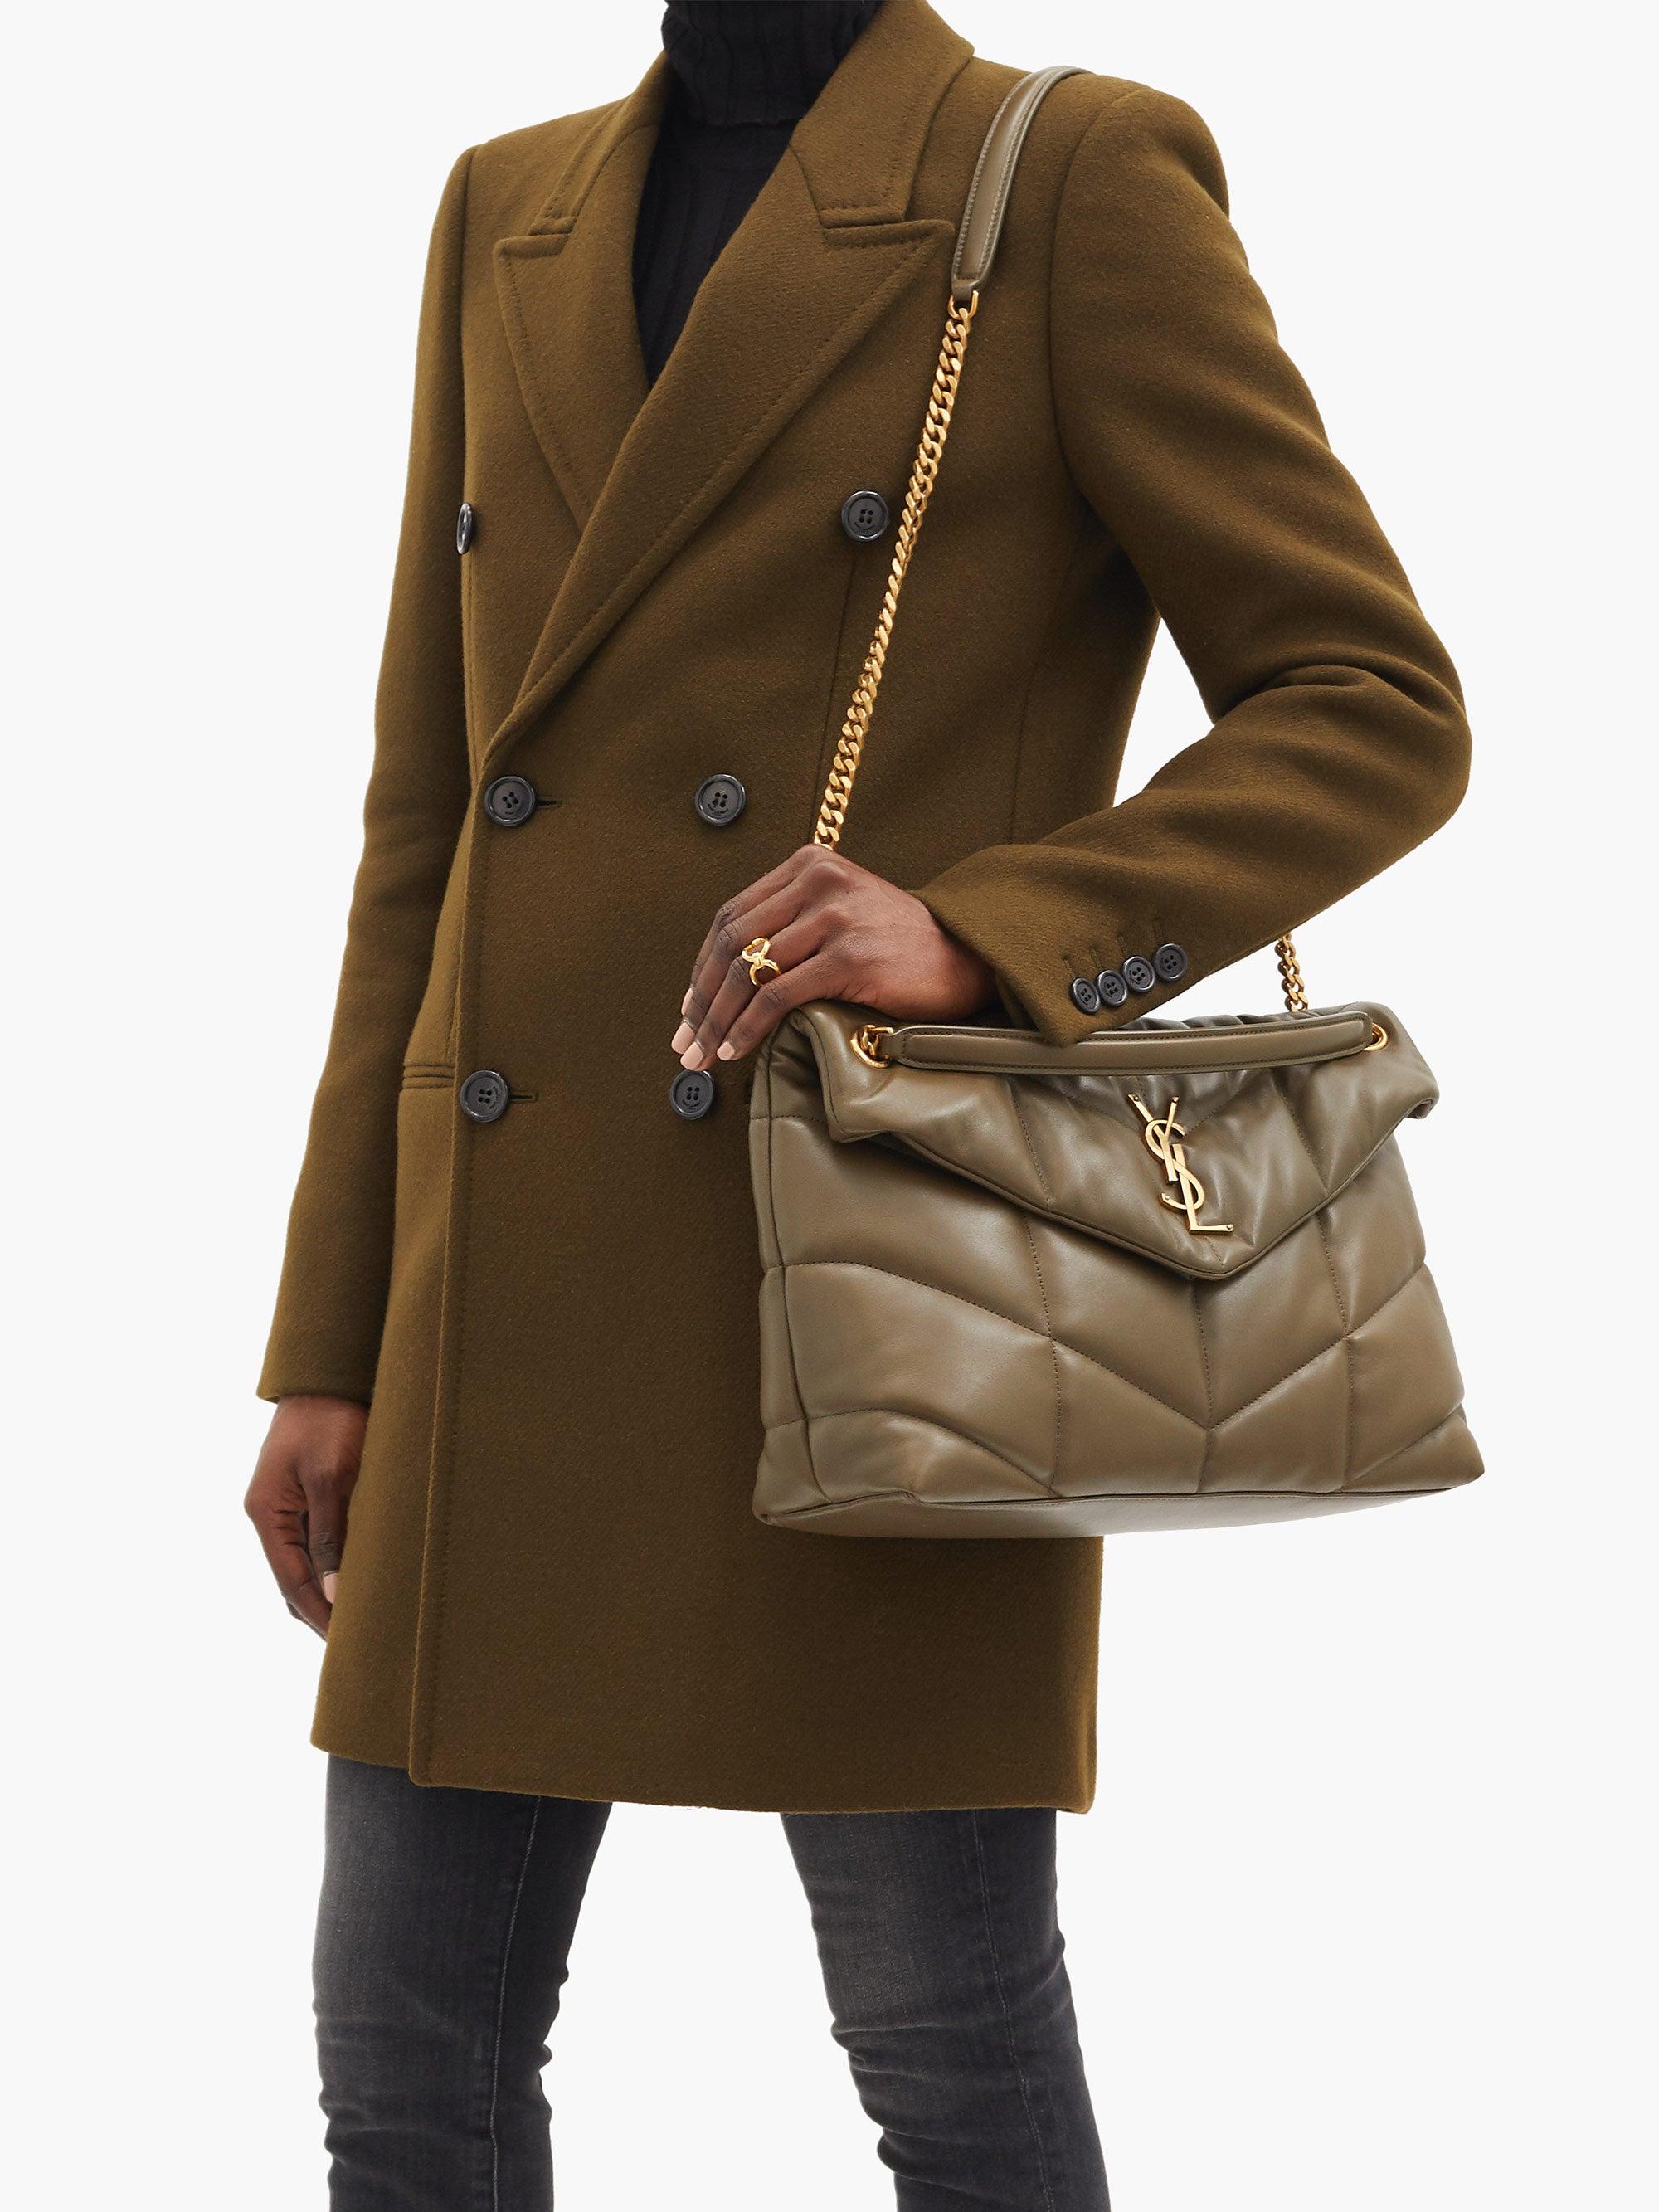 Saint Laurent Loulou Puffer Medium Leather Shoulder Bag in Natural | Lyst